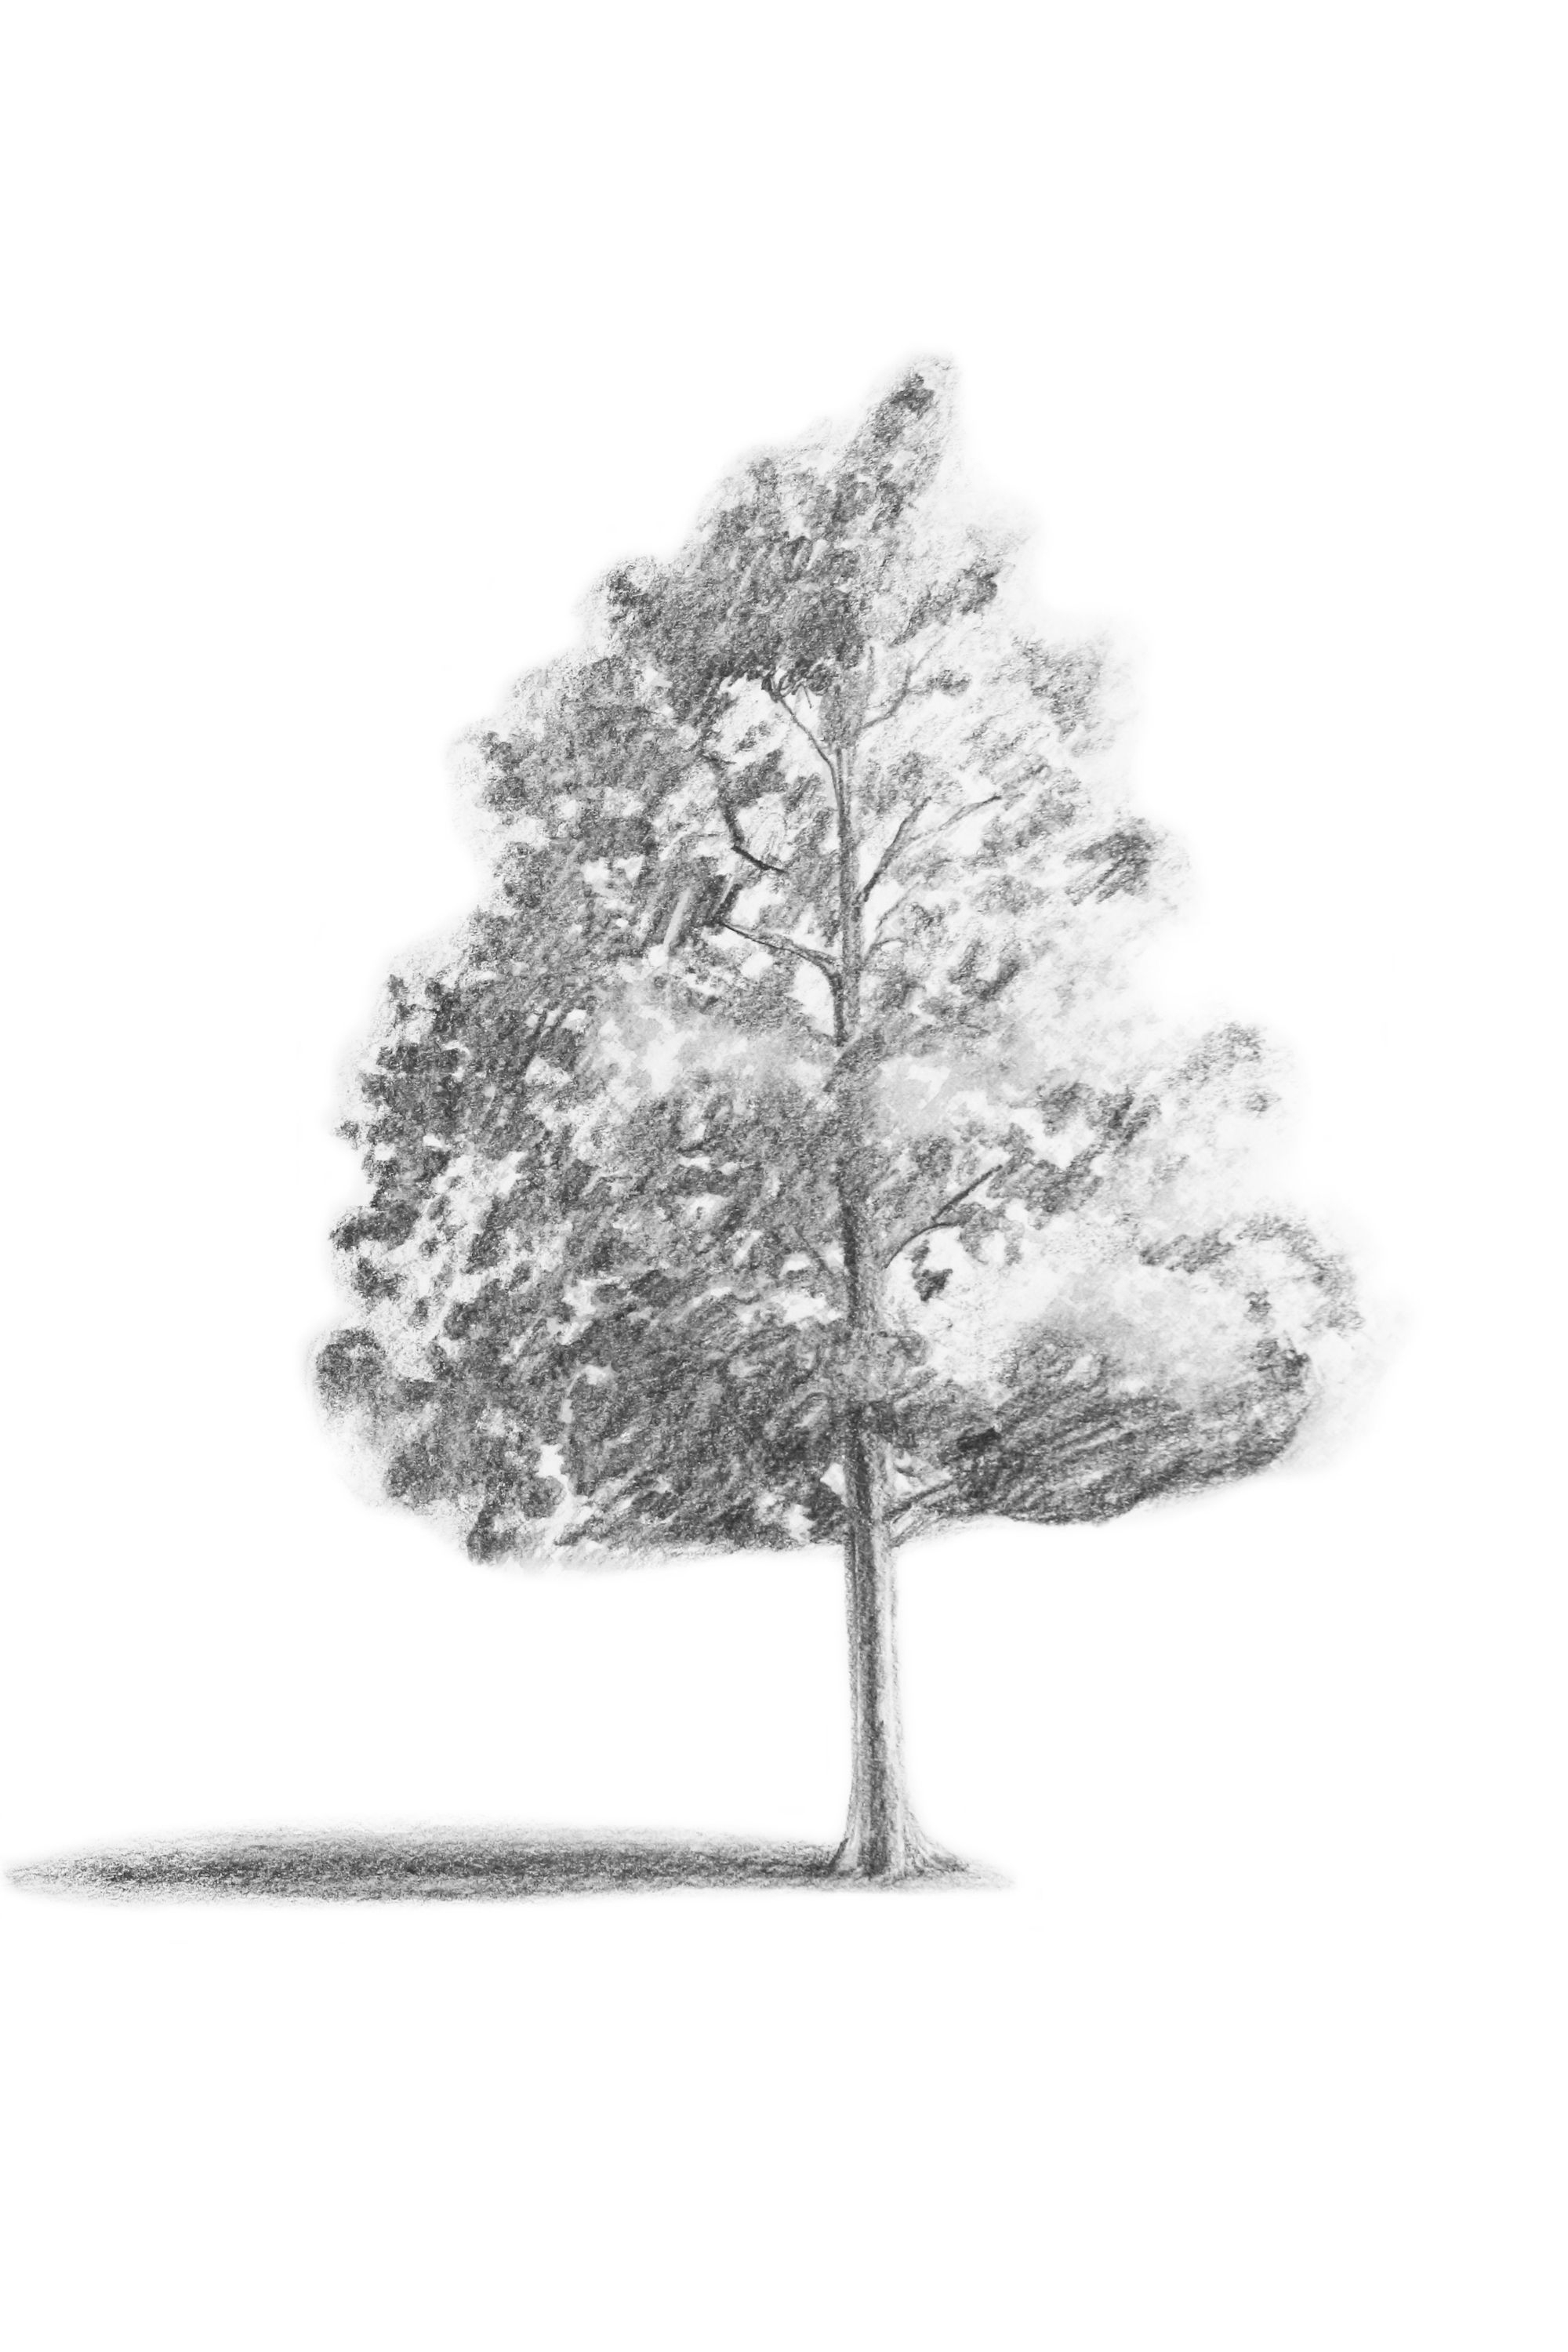 simple tree drawing